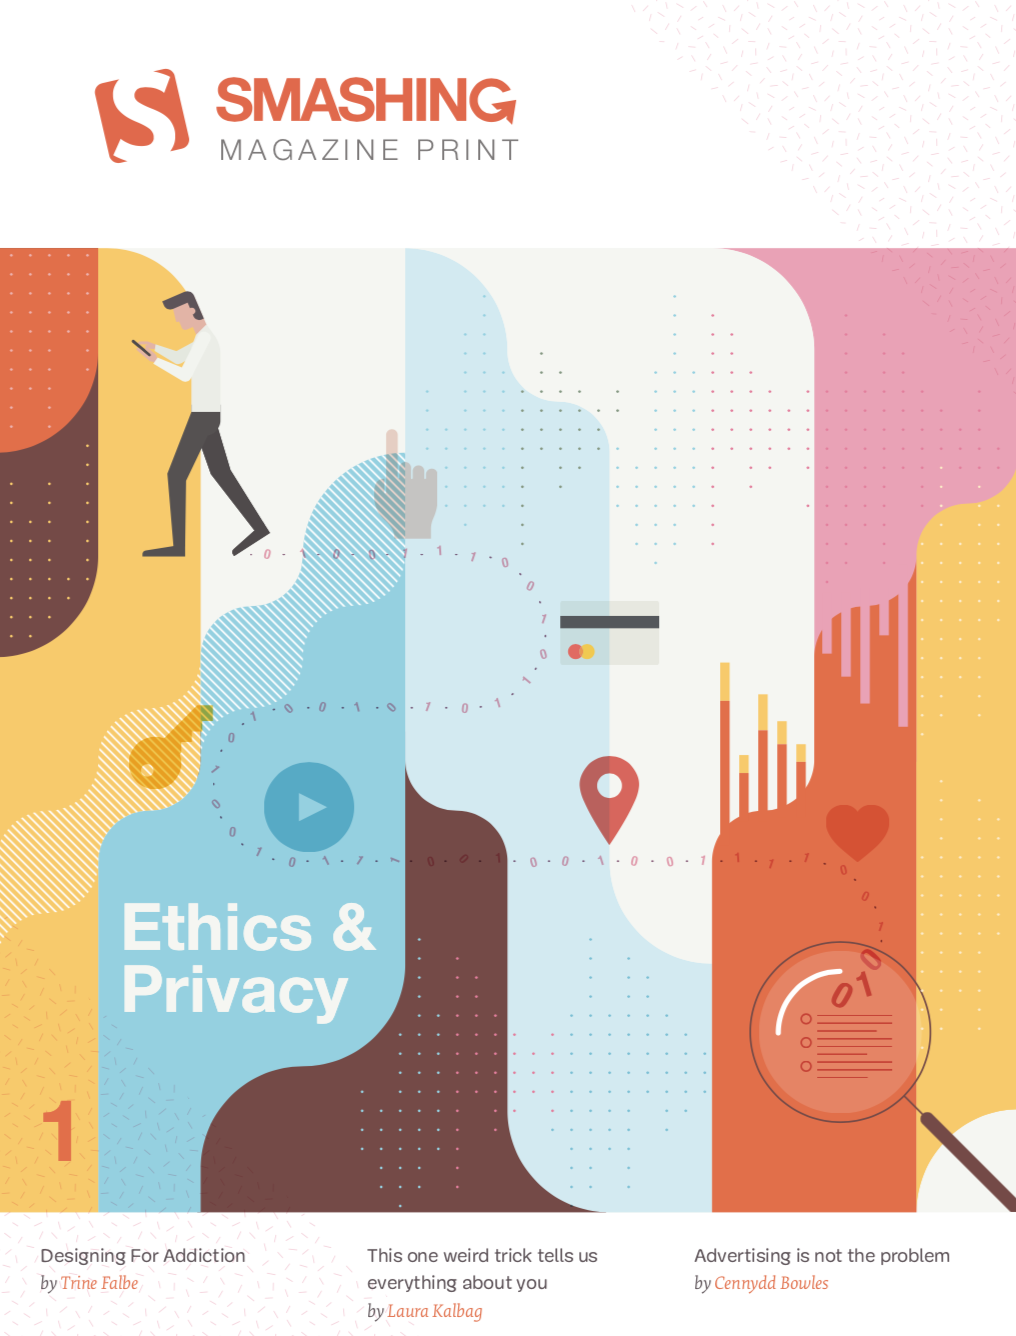 Smashing Magazine Print edition 1 cover: Ethics and Privacy.